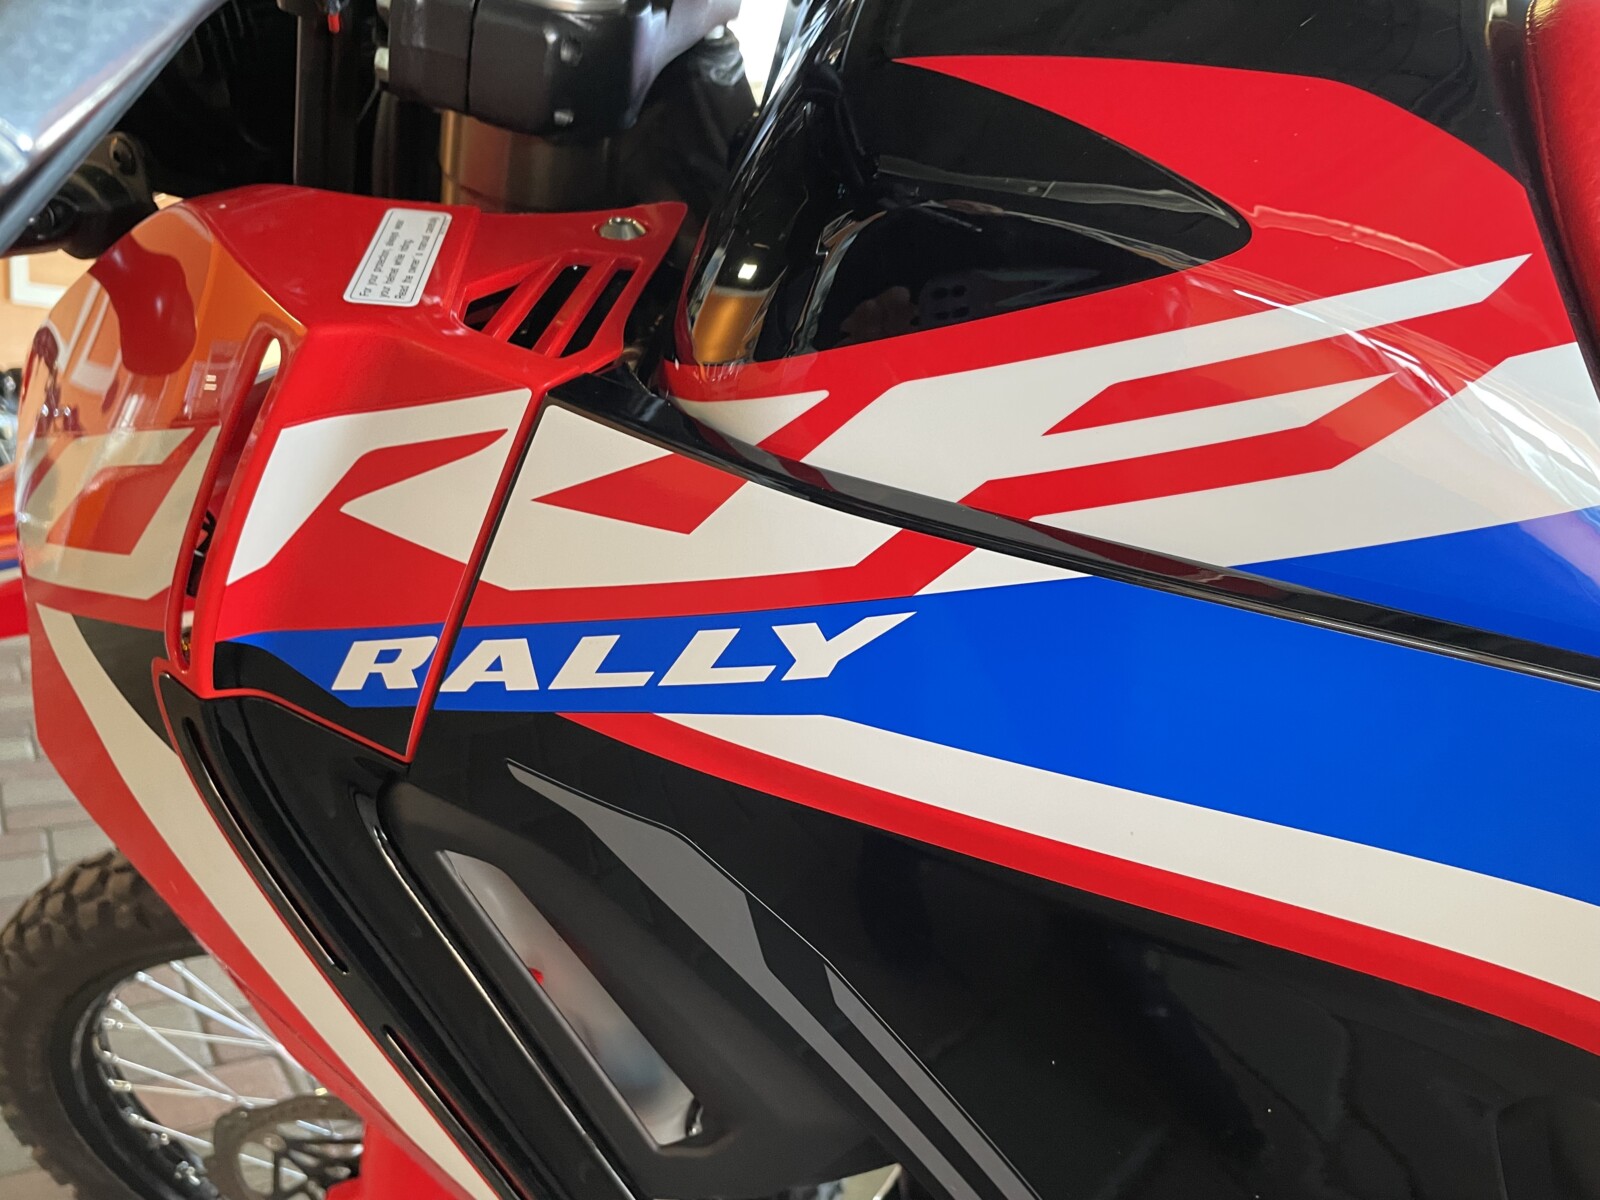 2021 Honda Rally Accessories coming soon!